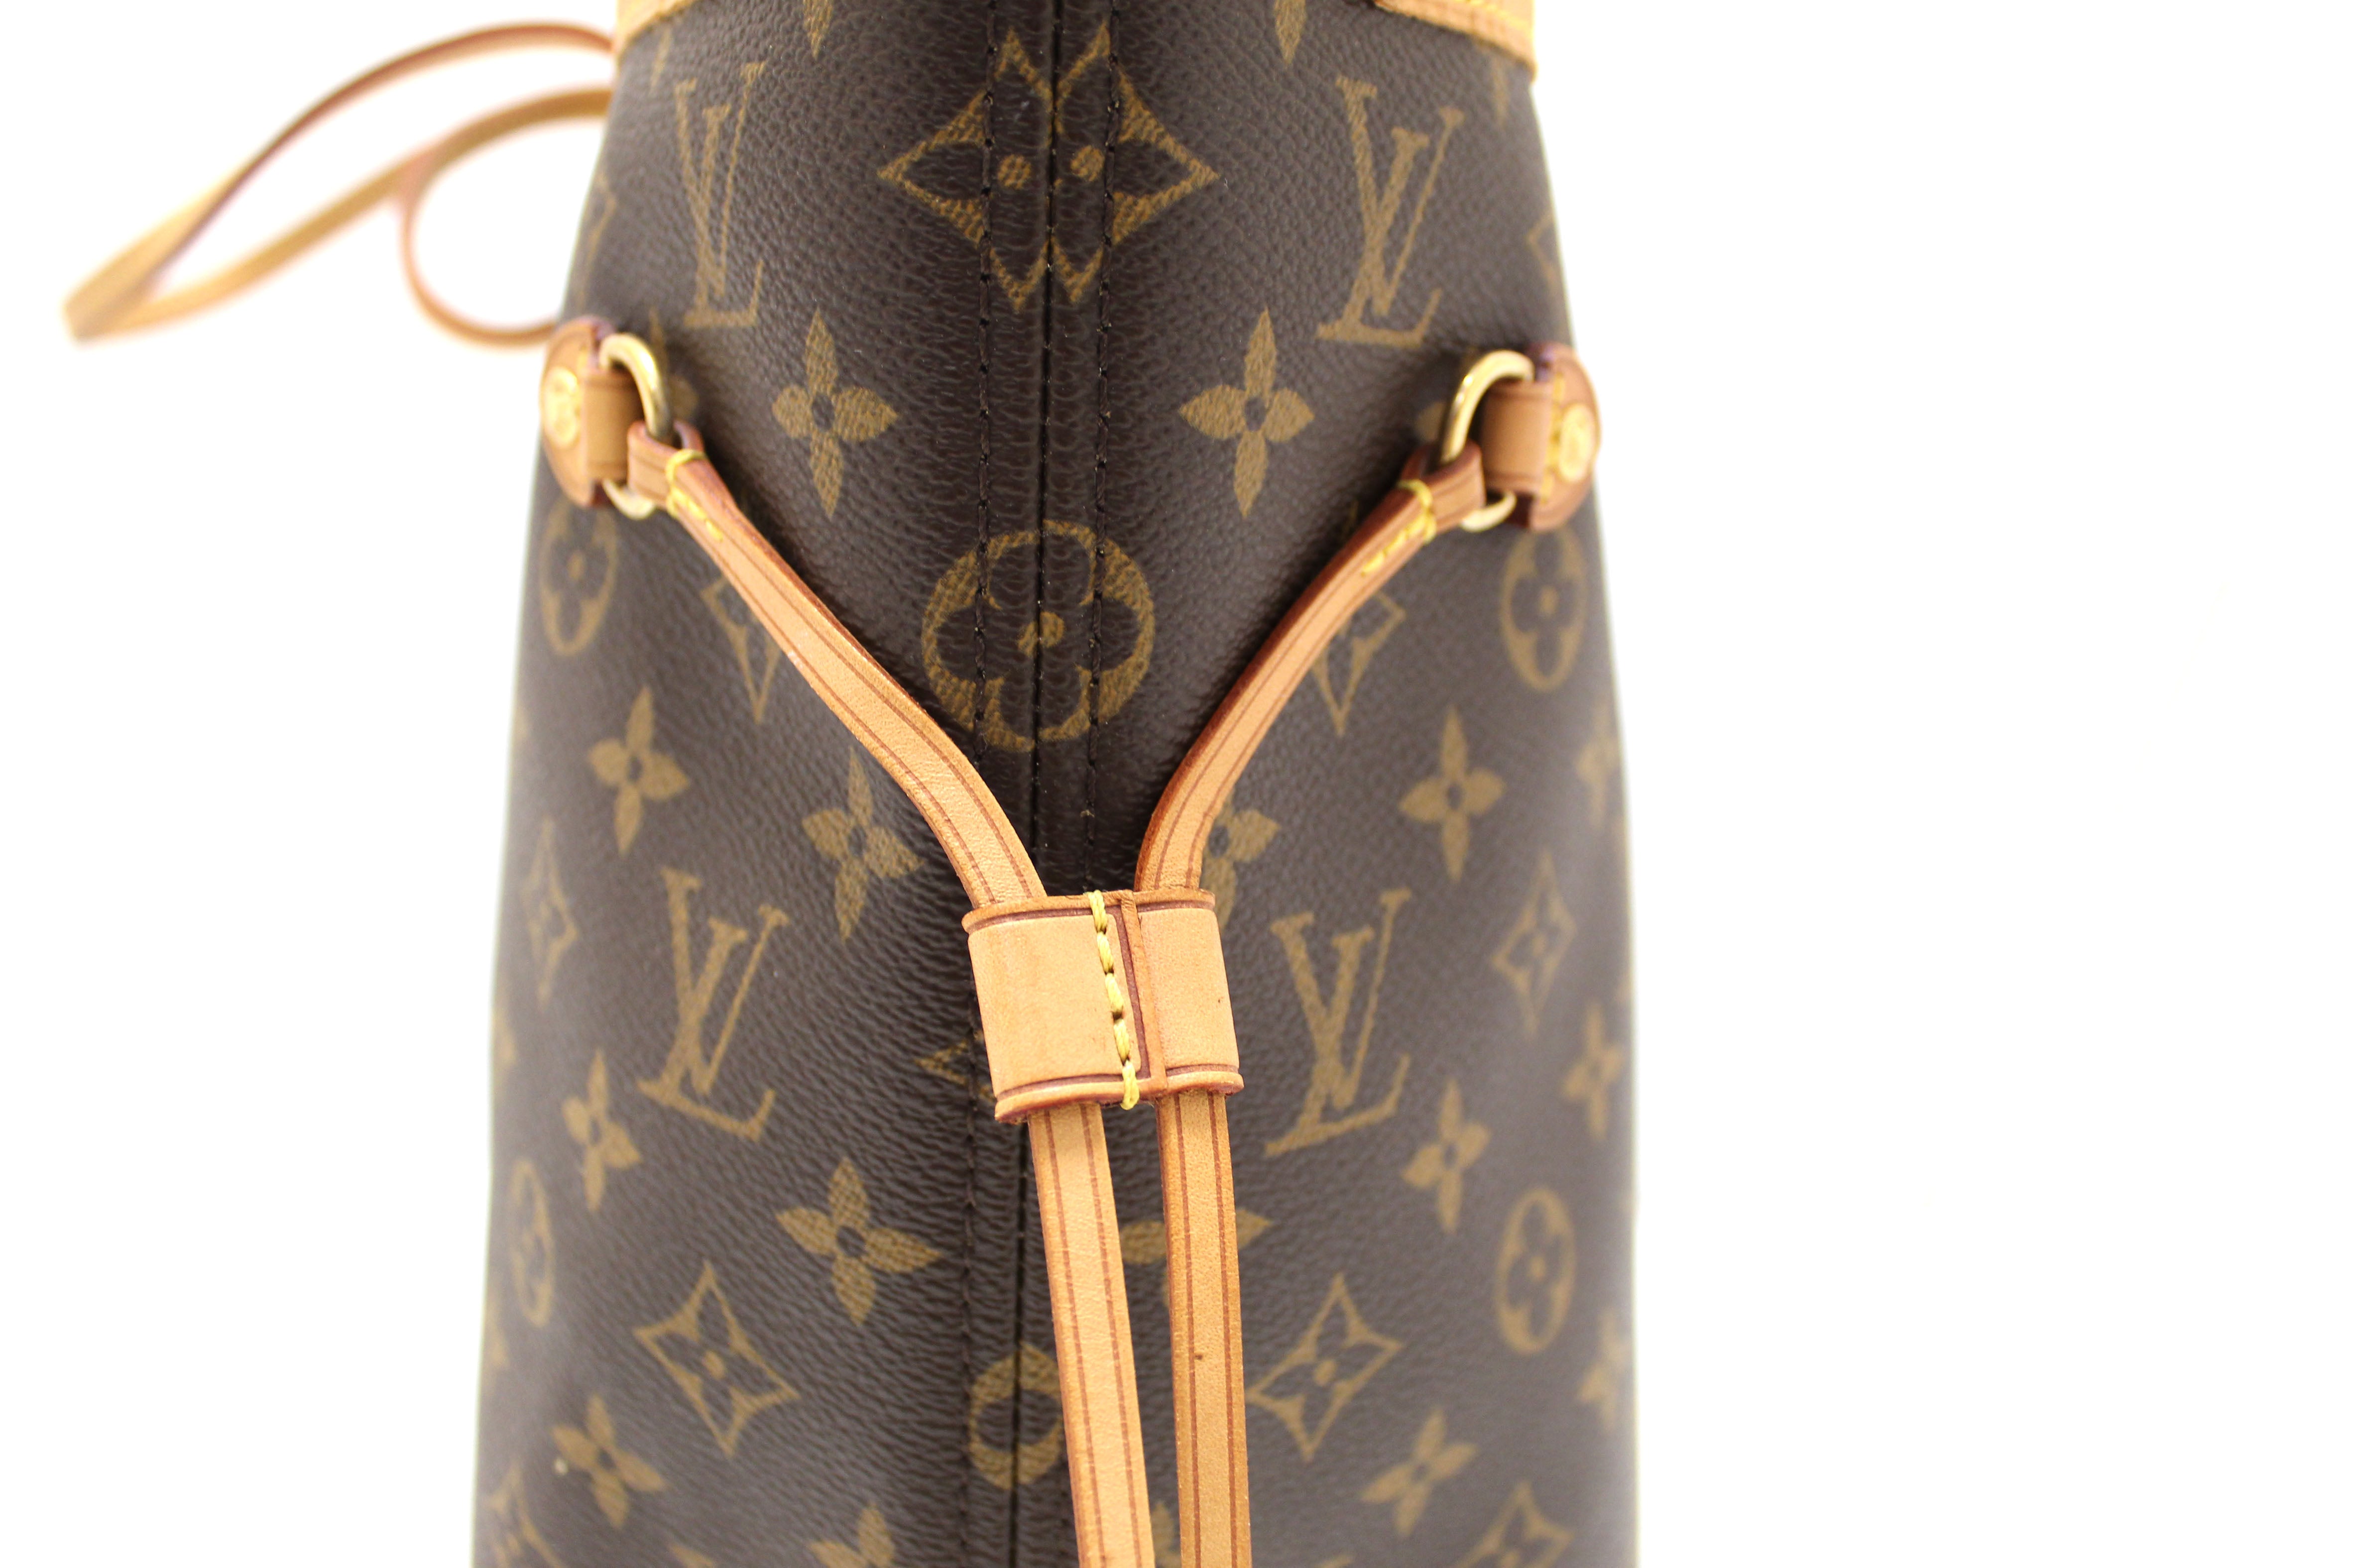 2015 Louis Vuitton Monogram Neverfull MM Shoulder Bag + POUCH $2030+TAX